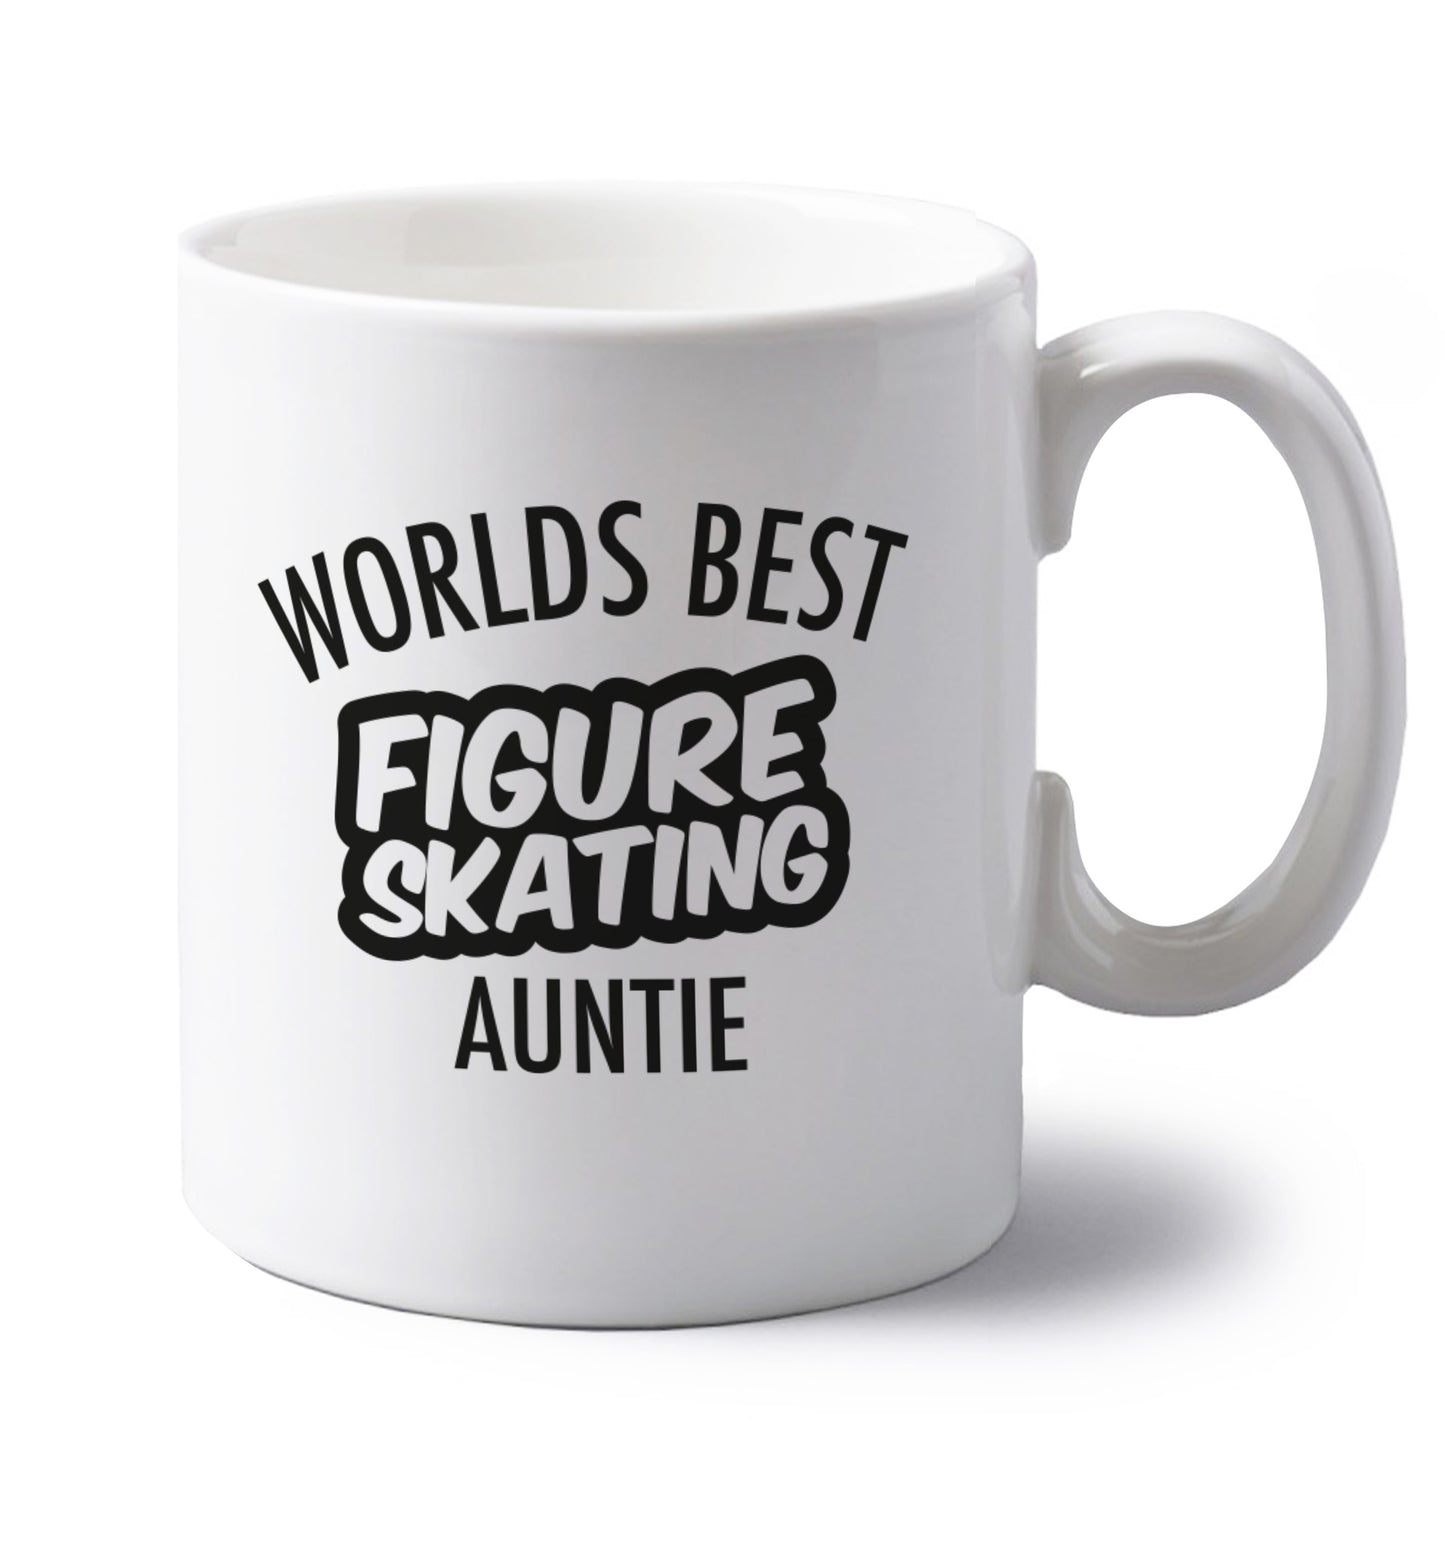 Worlds best figure skating auntie left handed white ceramic mug 